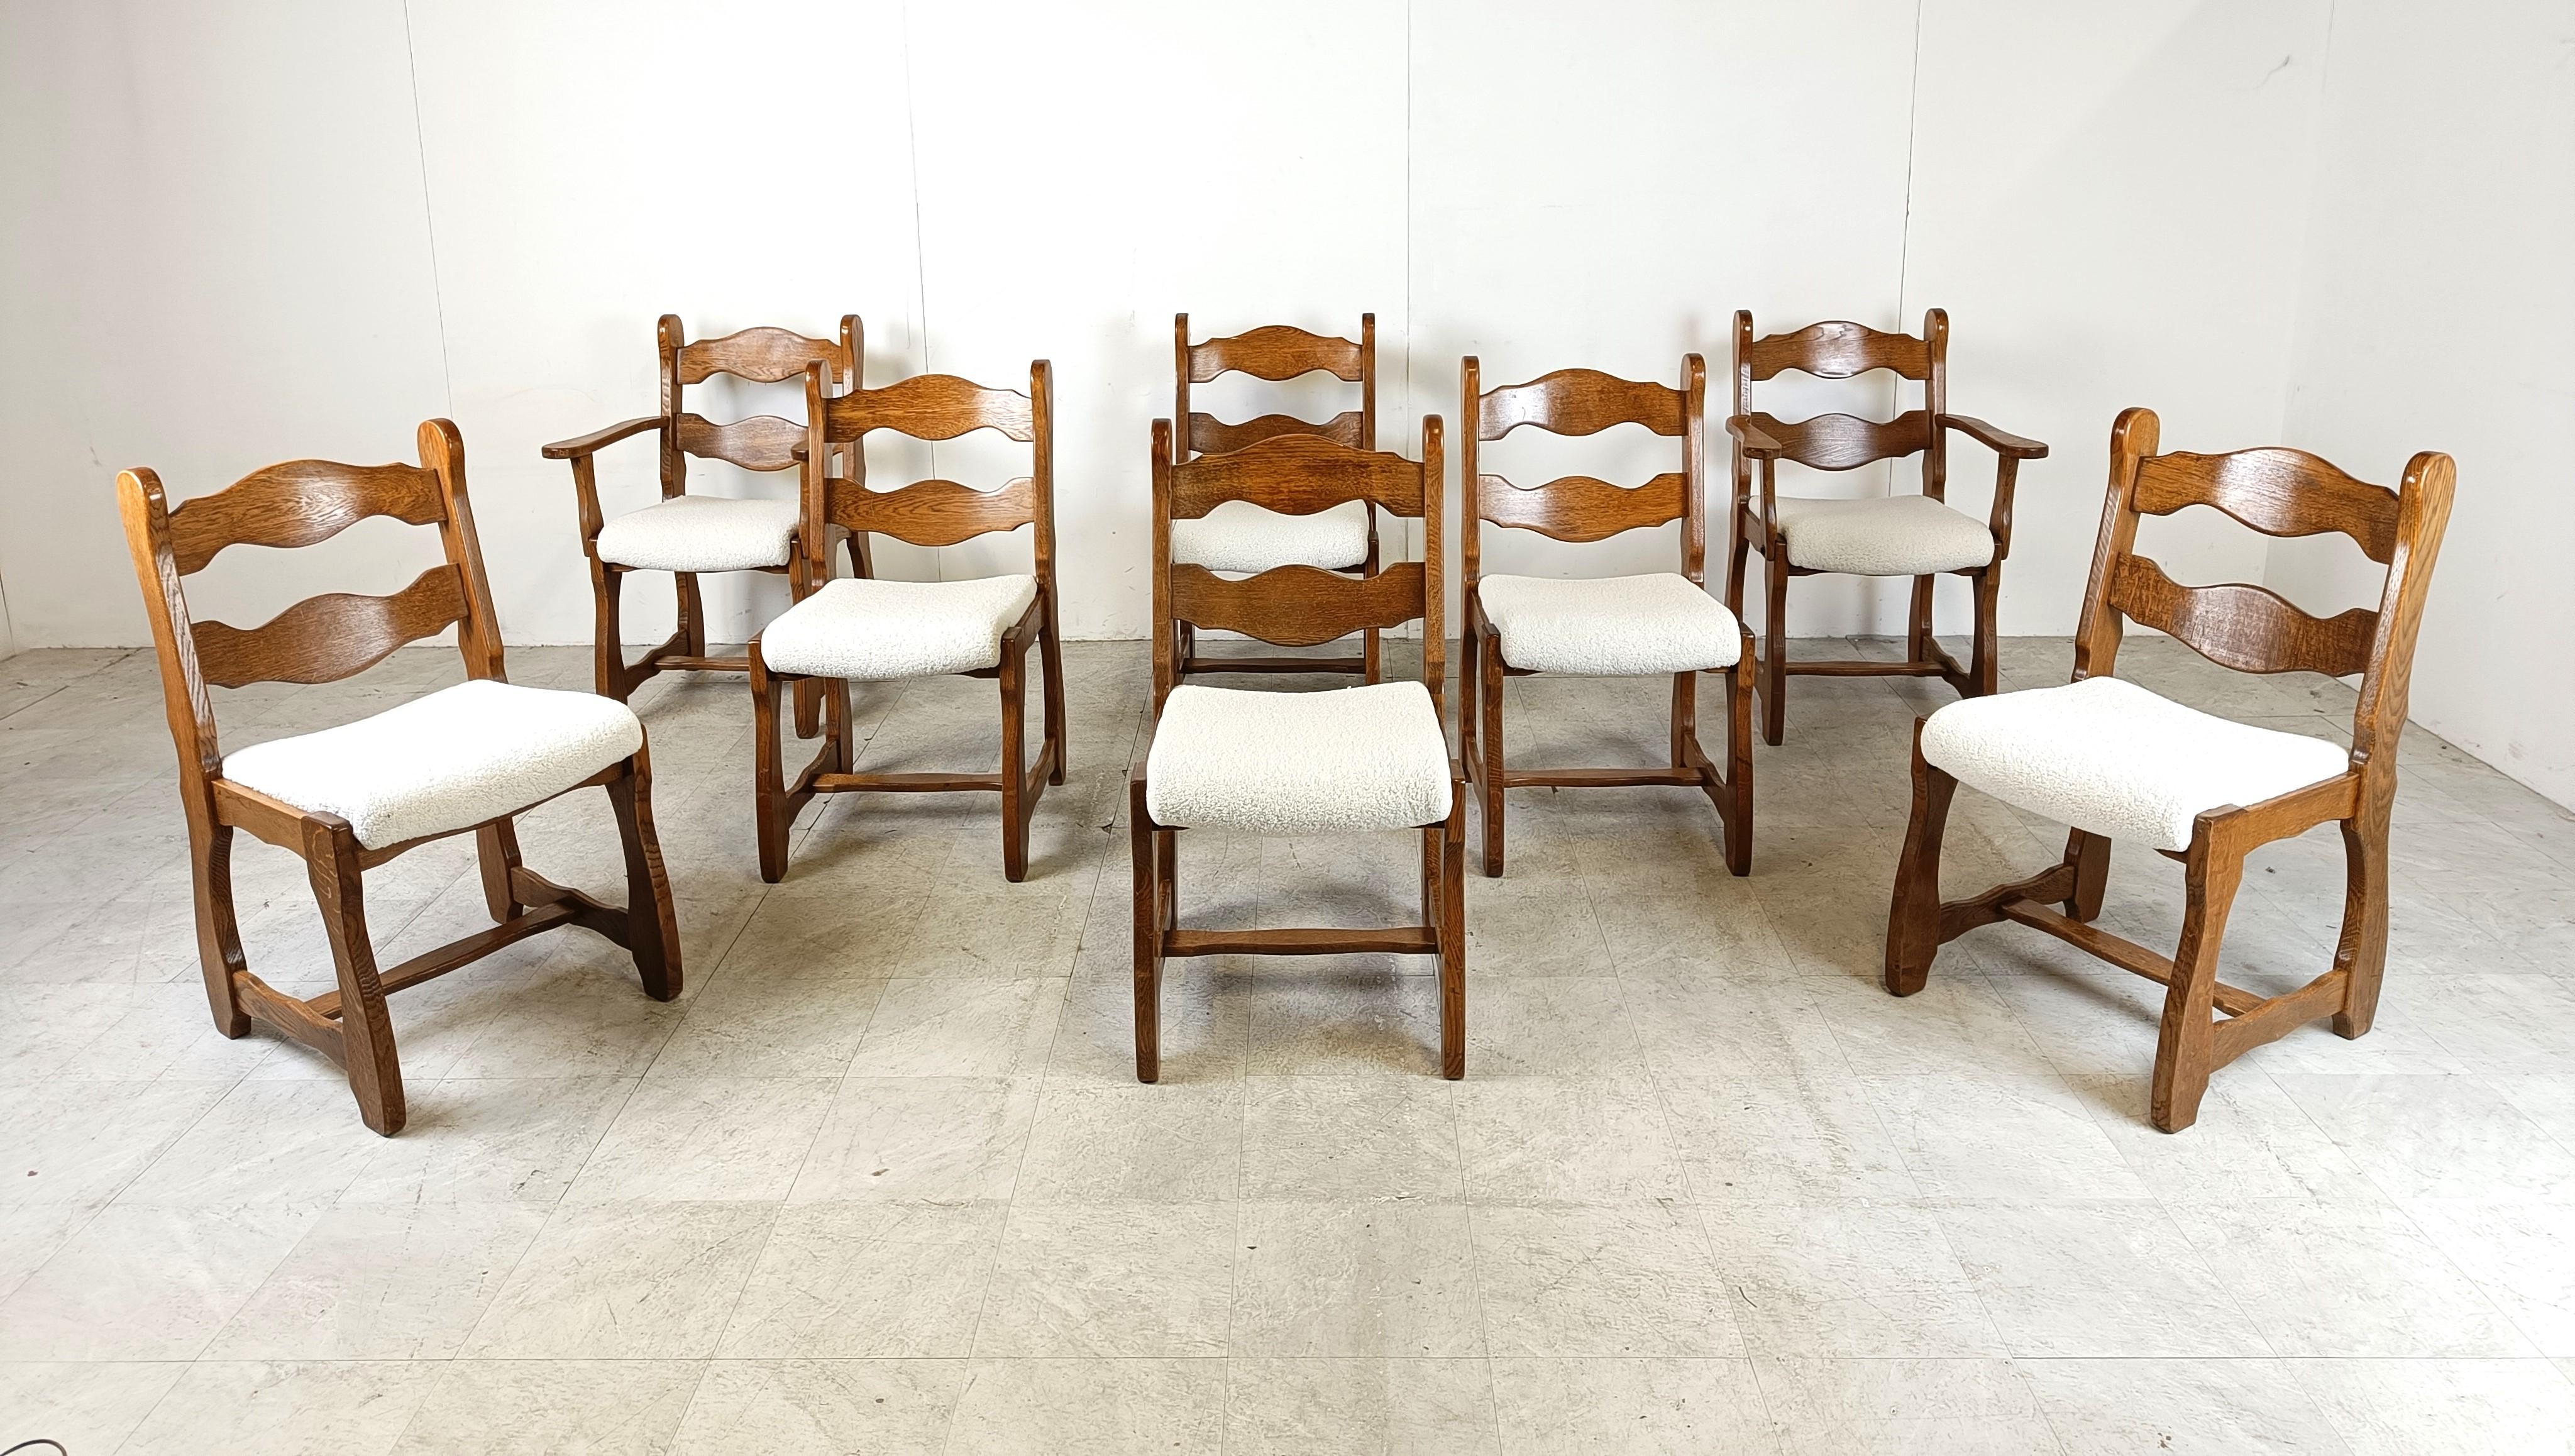 German Vintage brutalist dining chairs, set of 8 - 1960s